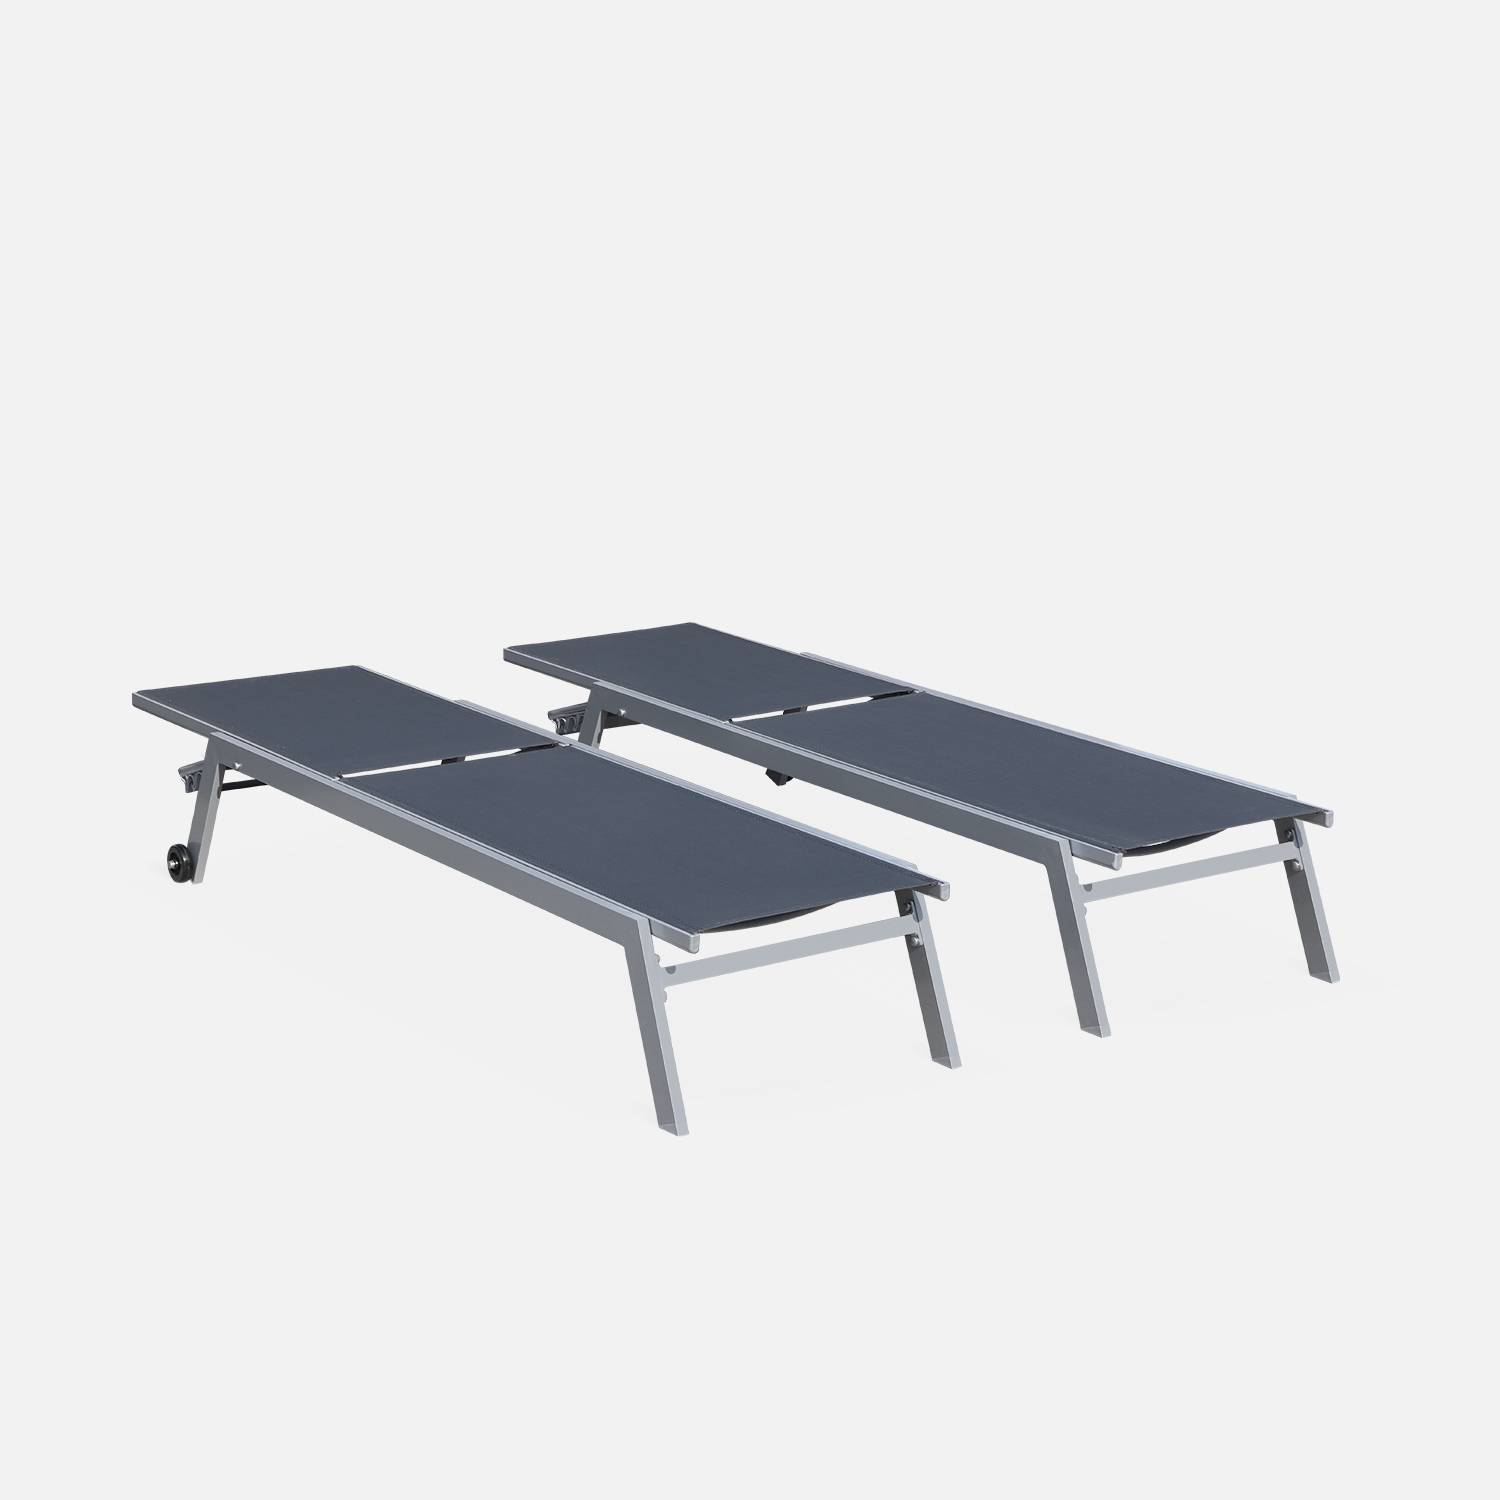 Pair of multi-position aluminium sun loungers with wheels - Elsa - Grey frame, Charcoal Grey textilene fabric Photo3